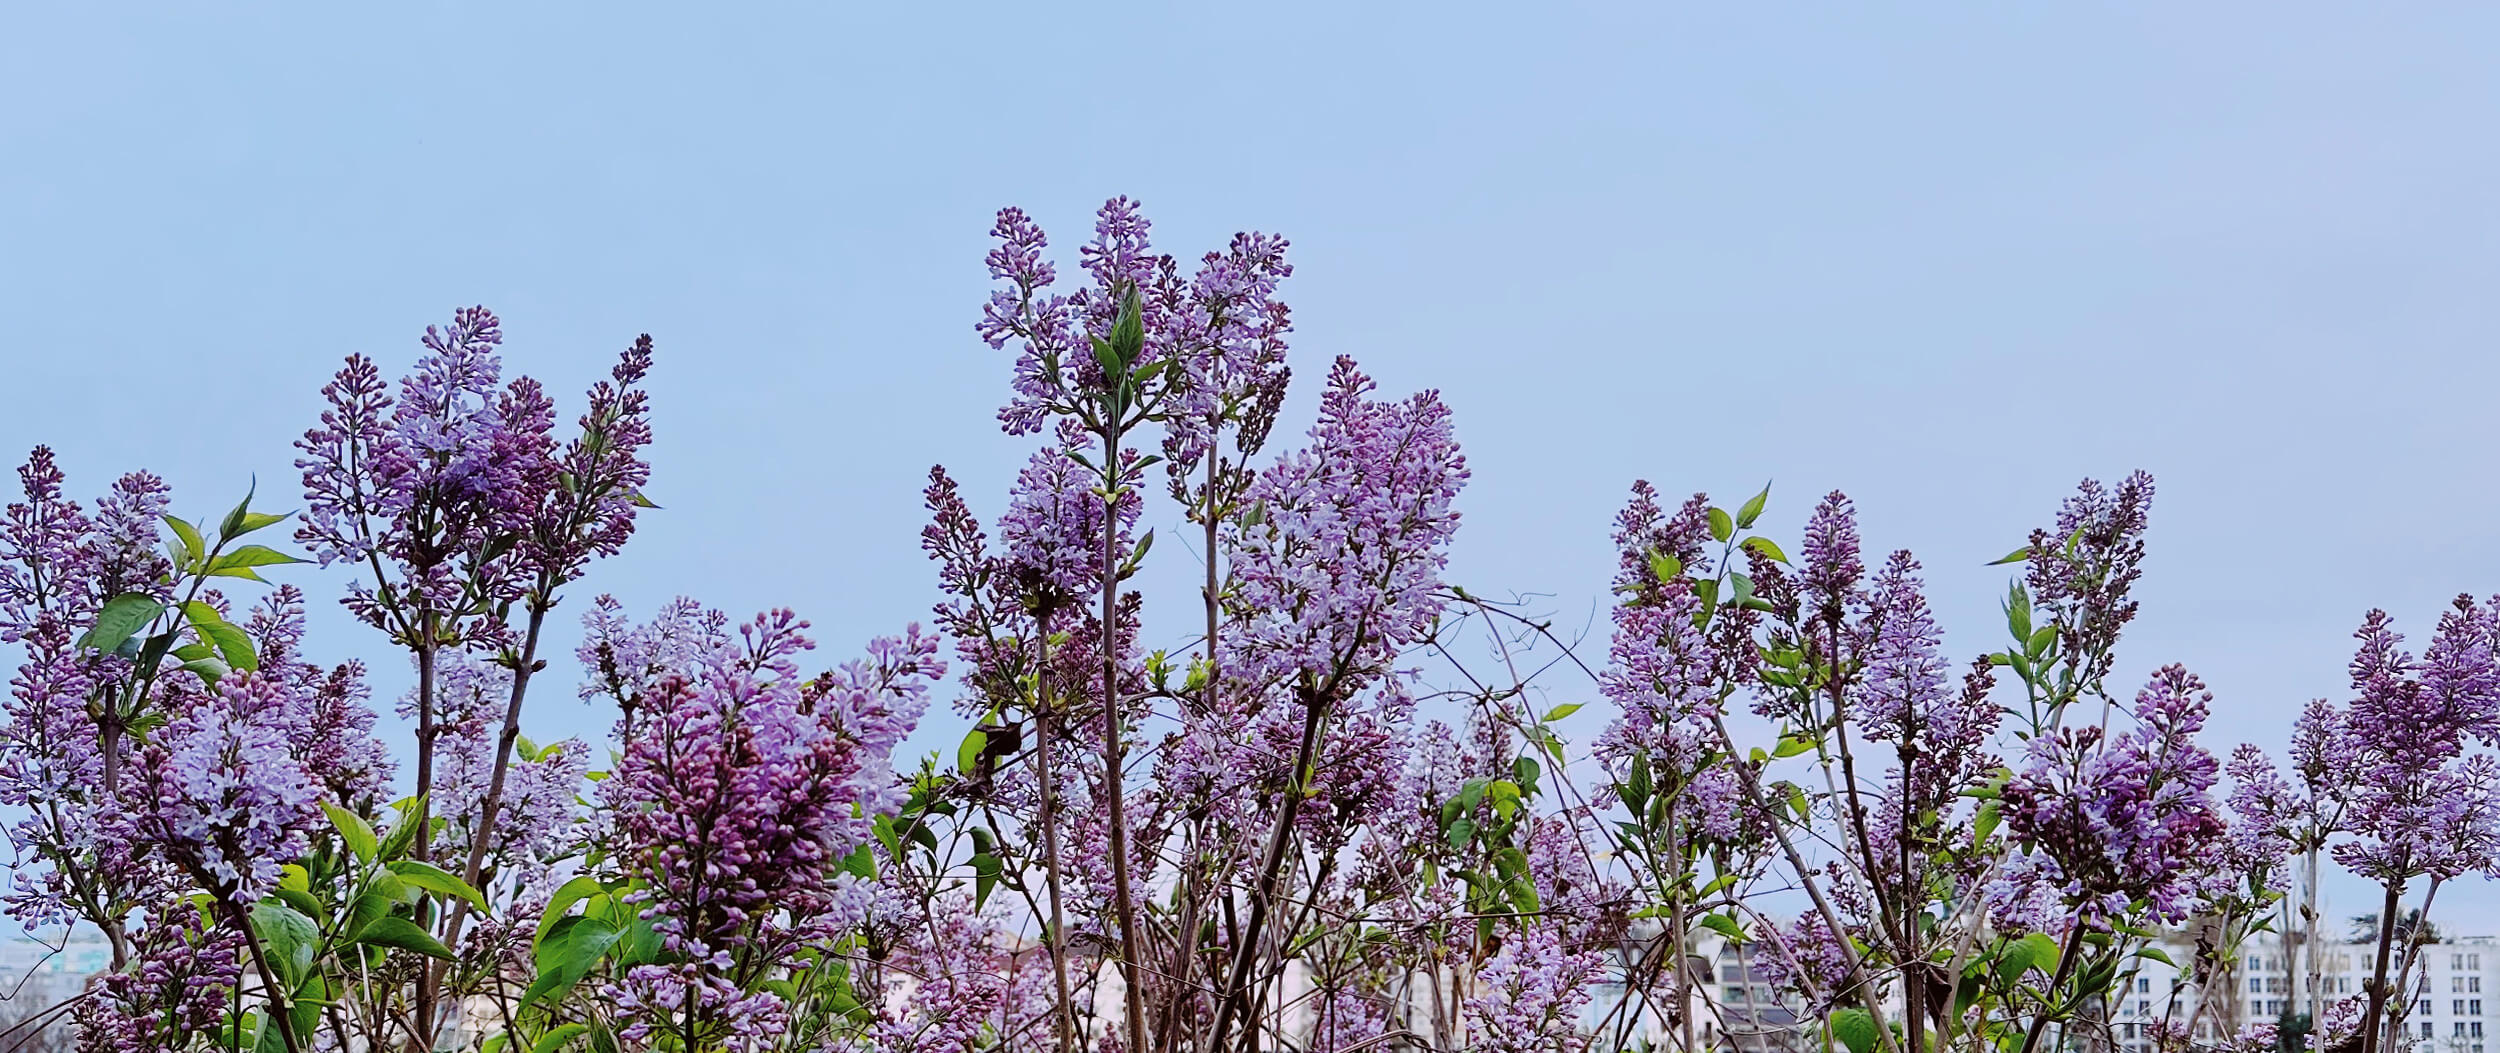 Matthias Maier | Stories | Week 13 | Lilacs blooming on the Rhine